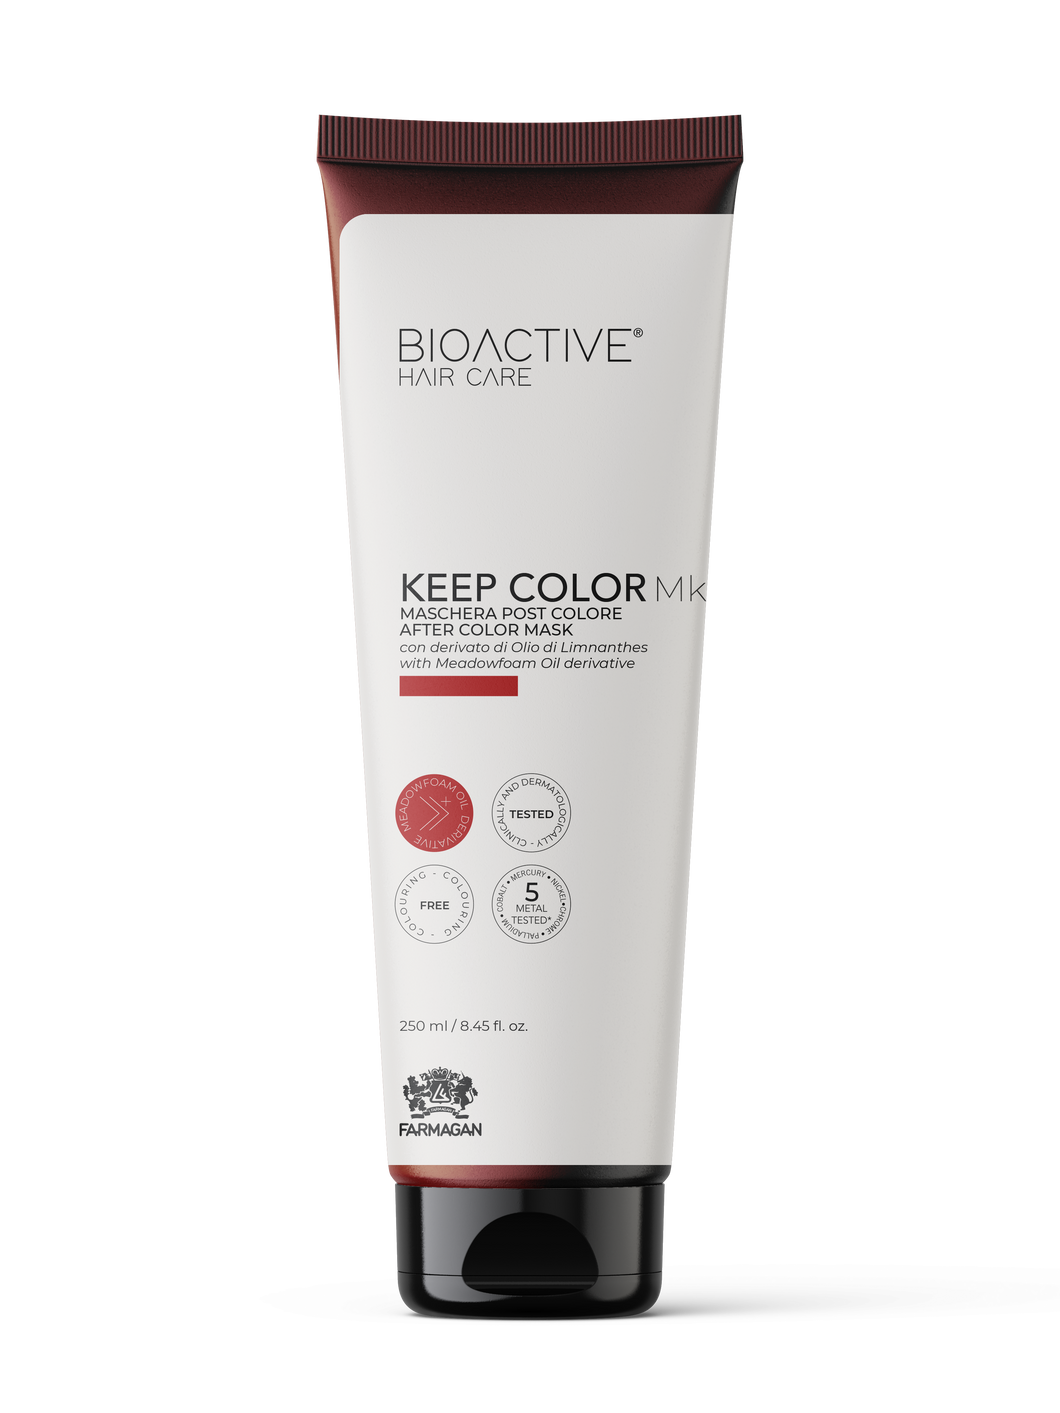 #Farmagan Bioactive Hair Care Keep Color MK Post Color Mask 250ml